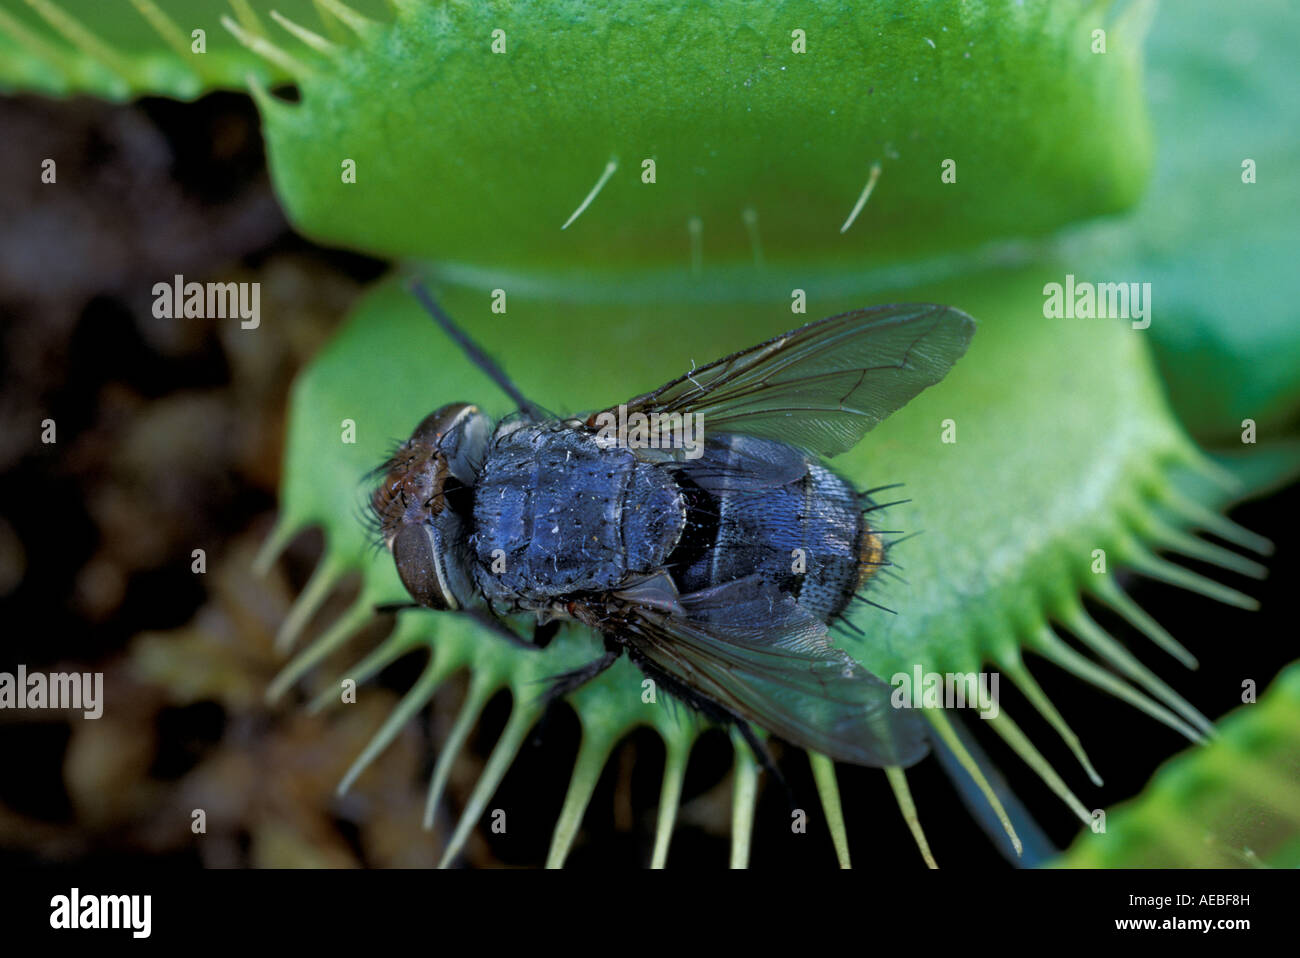 https://c8.alamy.com/comp/AEBF8H/venus-flytrap-dionaea-muscipula-and-housefly-in-trap-southeastern-AEBF8H.jpg